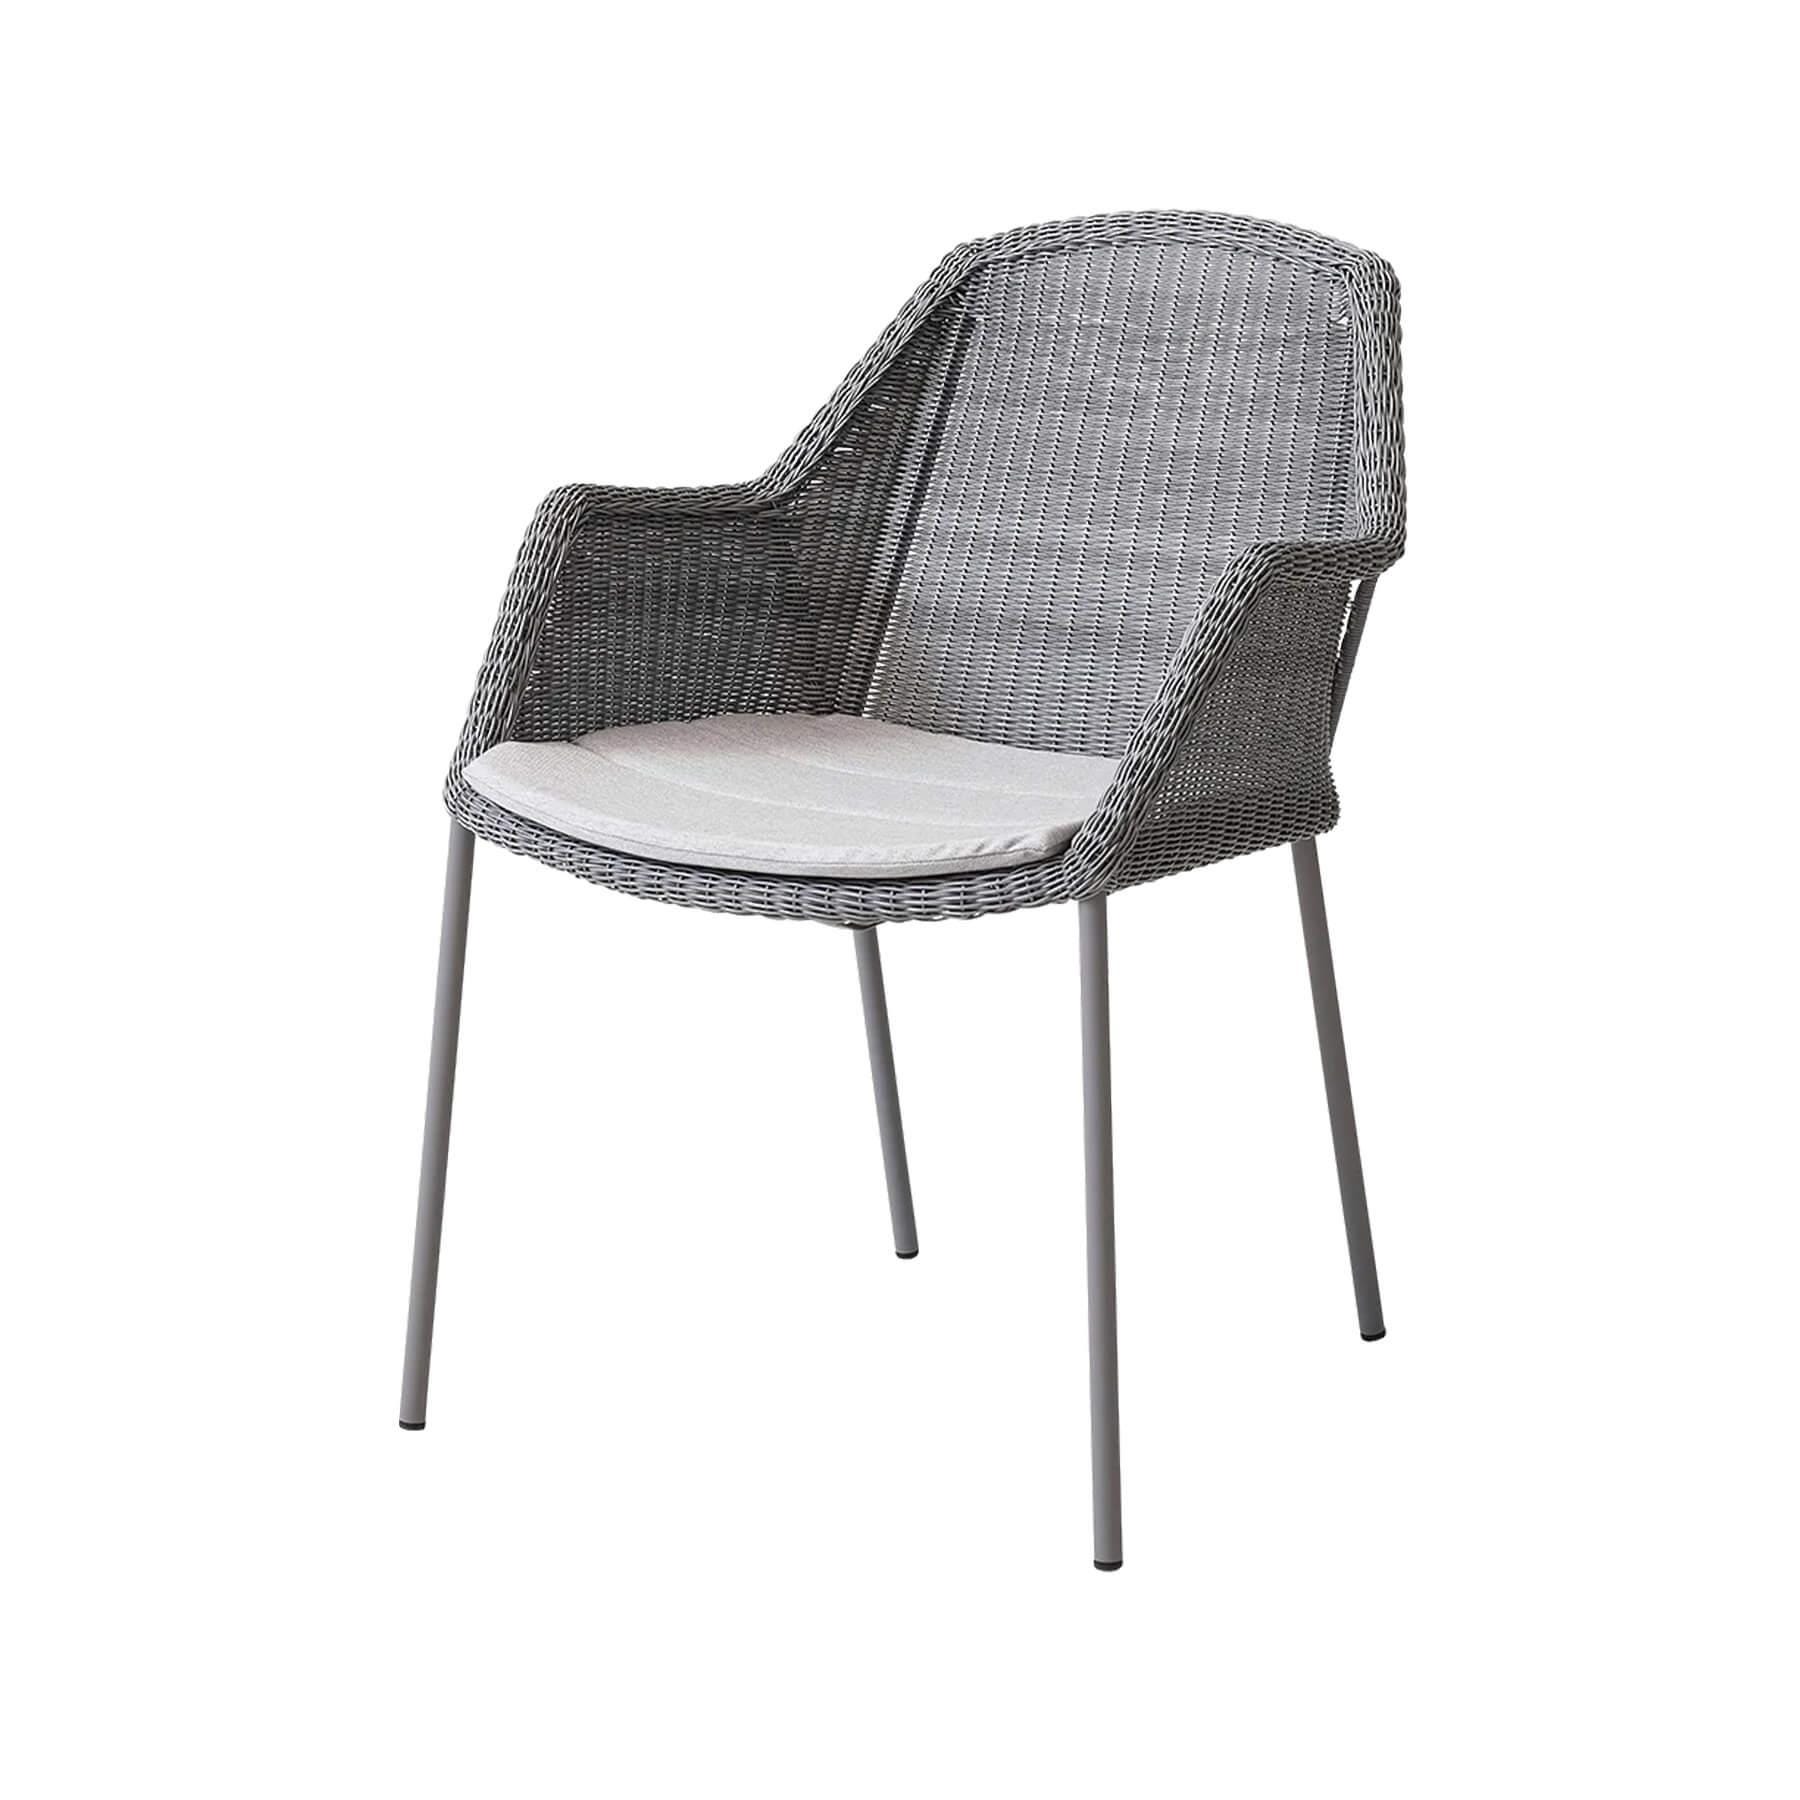 Caneline Breeze Outdoor Chair Light Grey Seat Natte Light Grey Cushion